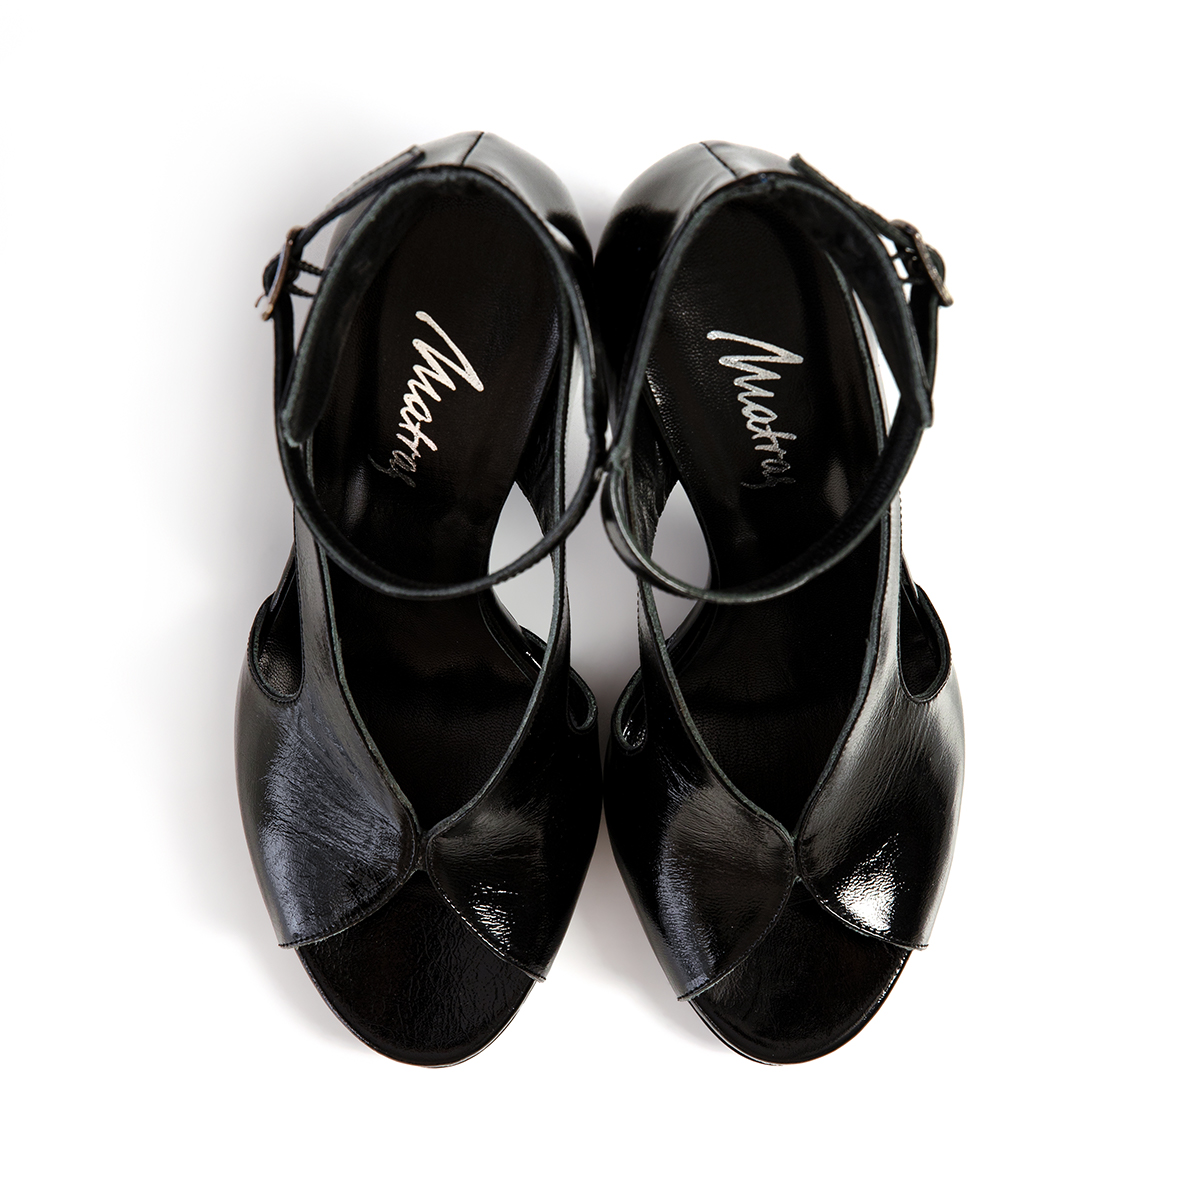 Matraş Kadın Rugan Deri Topuklu Ayakkabı Siyah